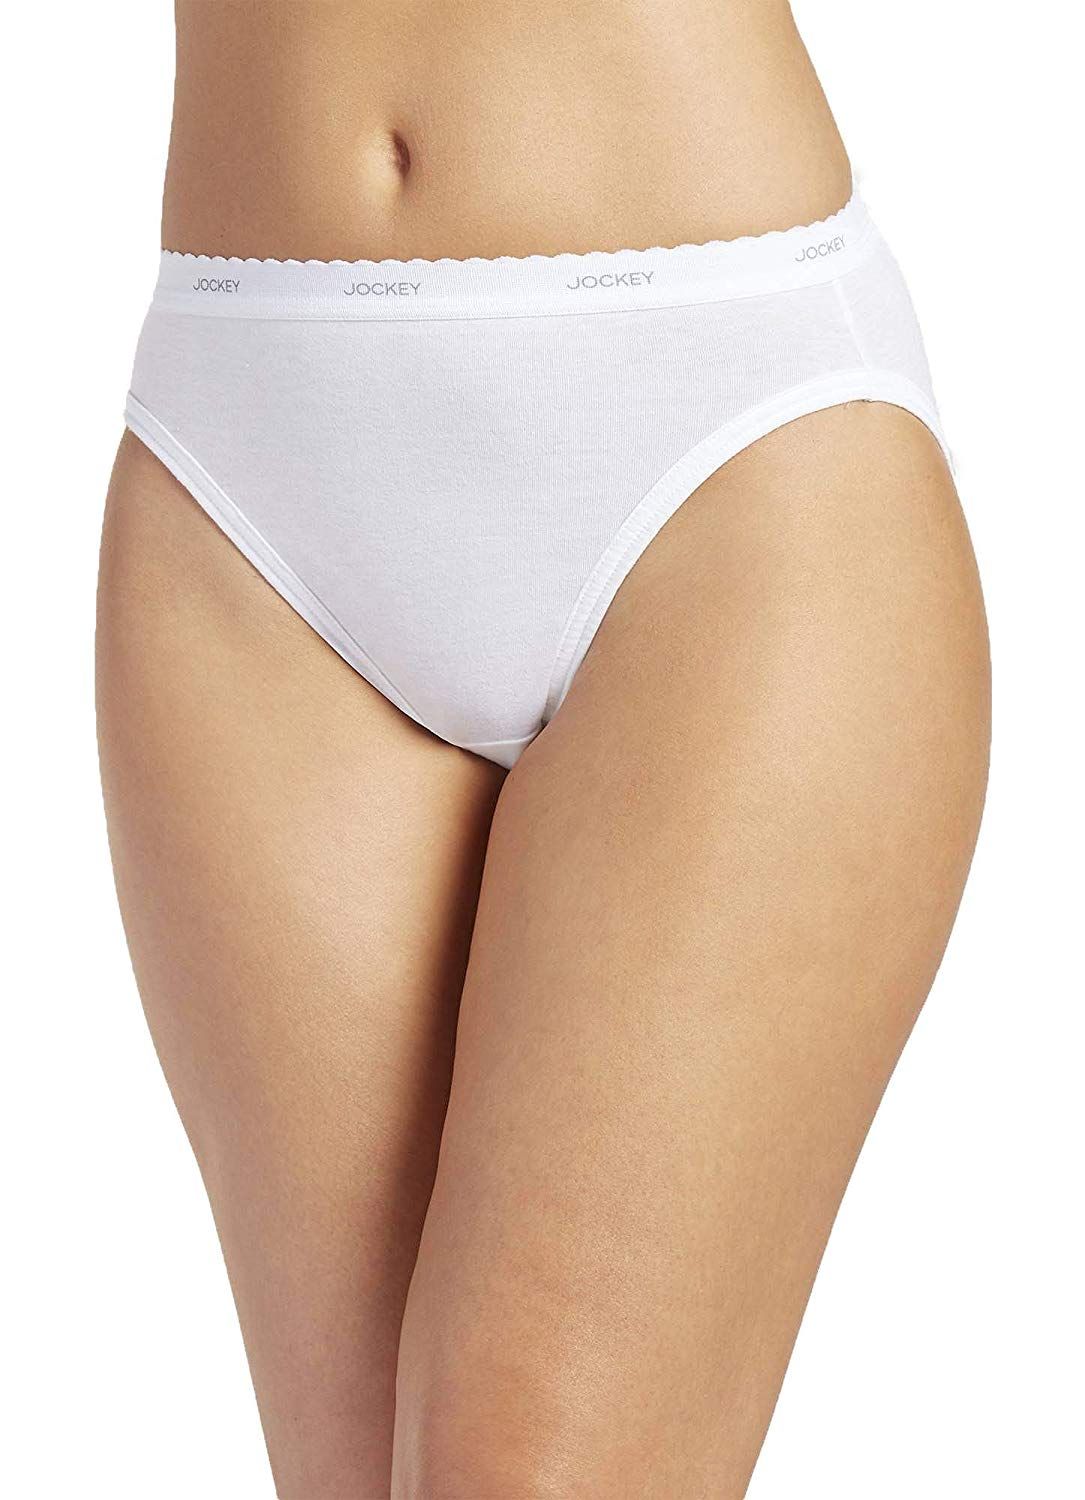 Jockey Womens Underwear Elance French Cut pure Cotton High Leg Tai Brief 3 Pack 